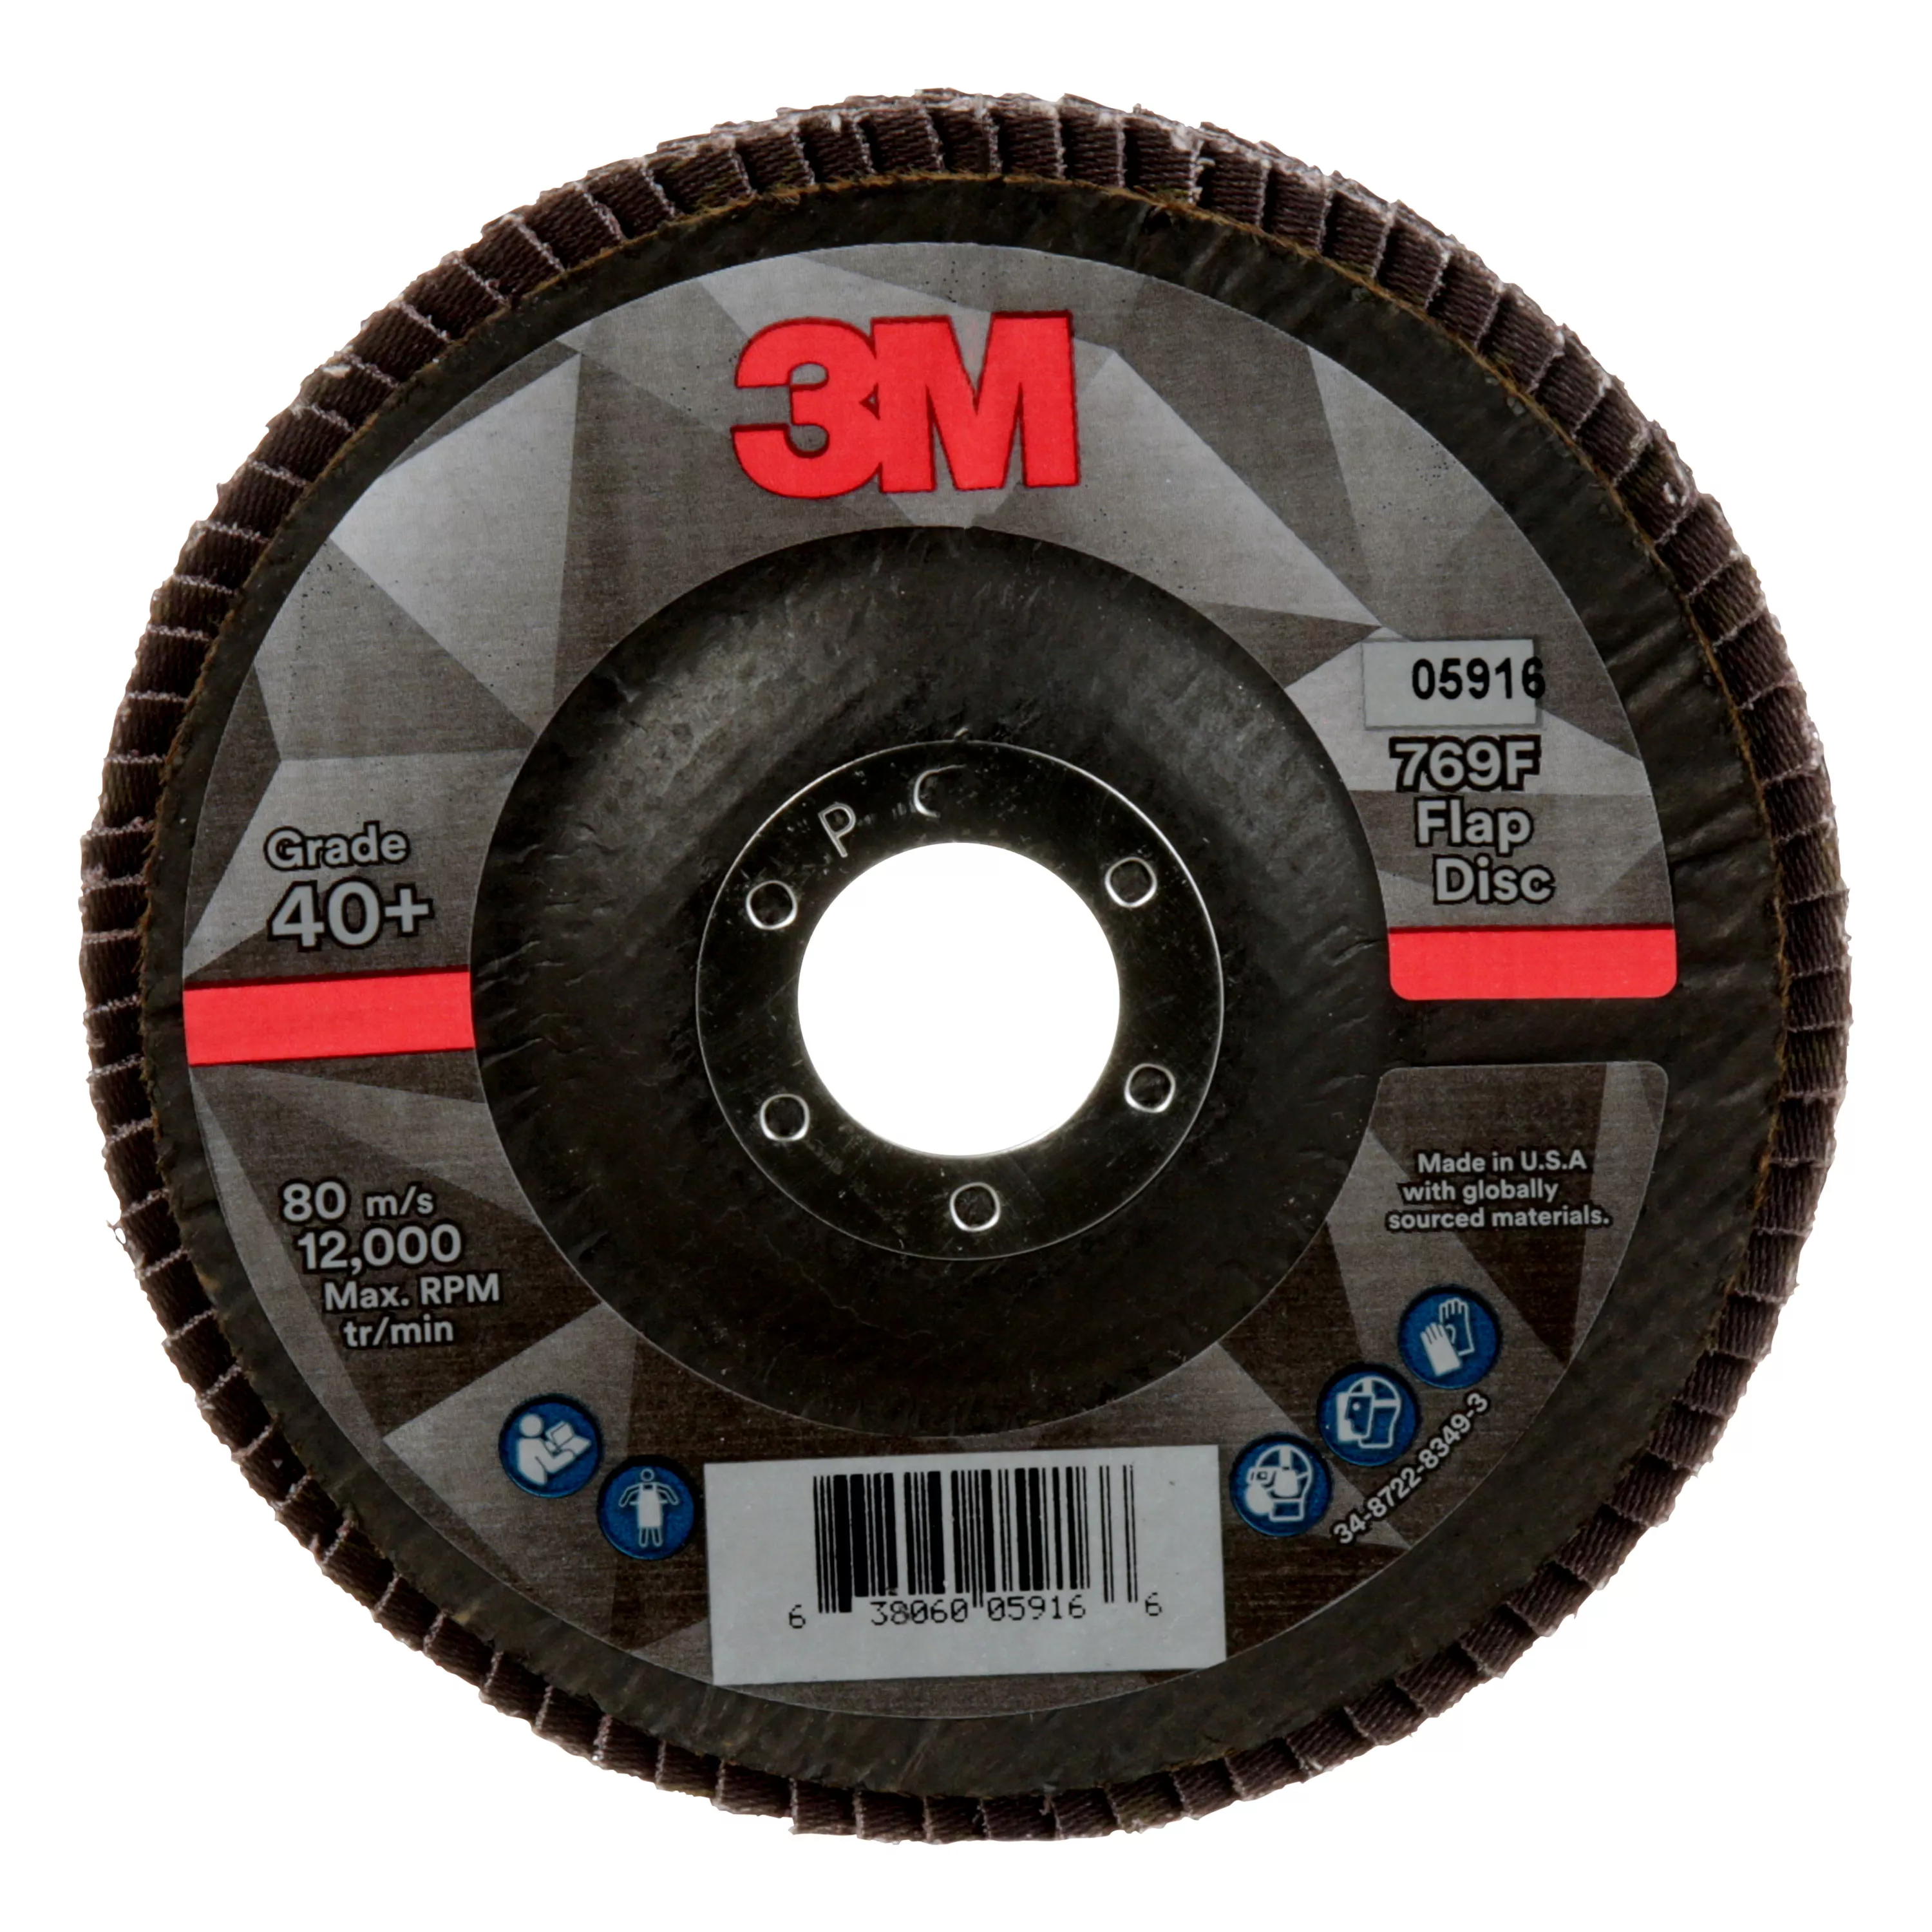 SKU 7100178127 | 3M™ Flap Disc 769F